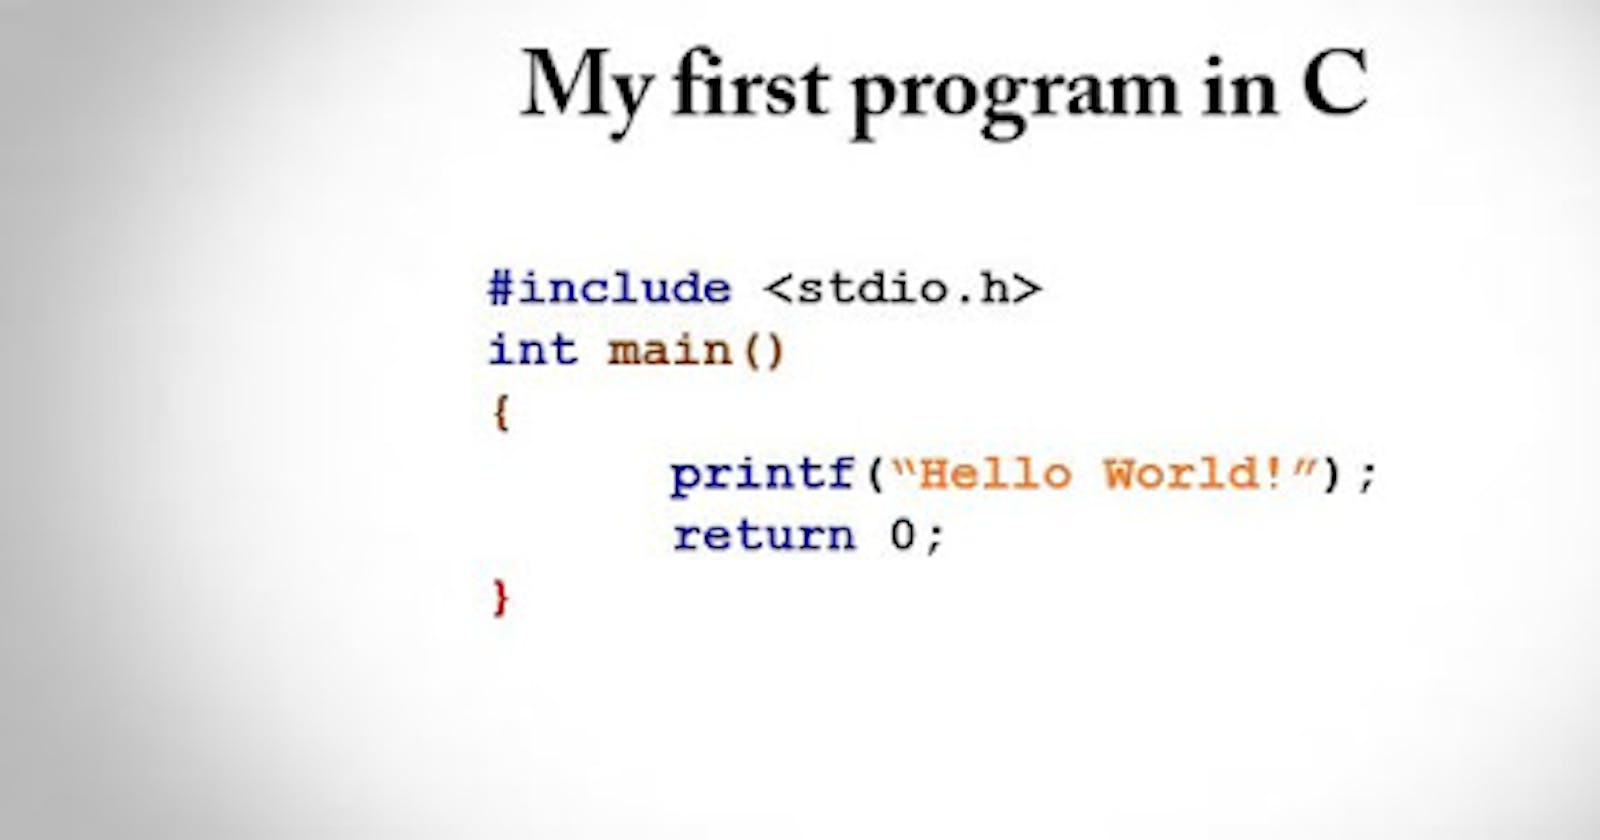 Hello World Program in C